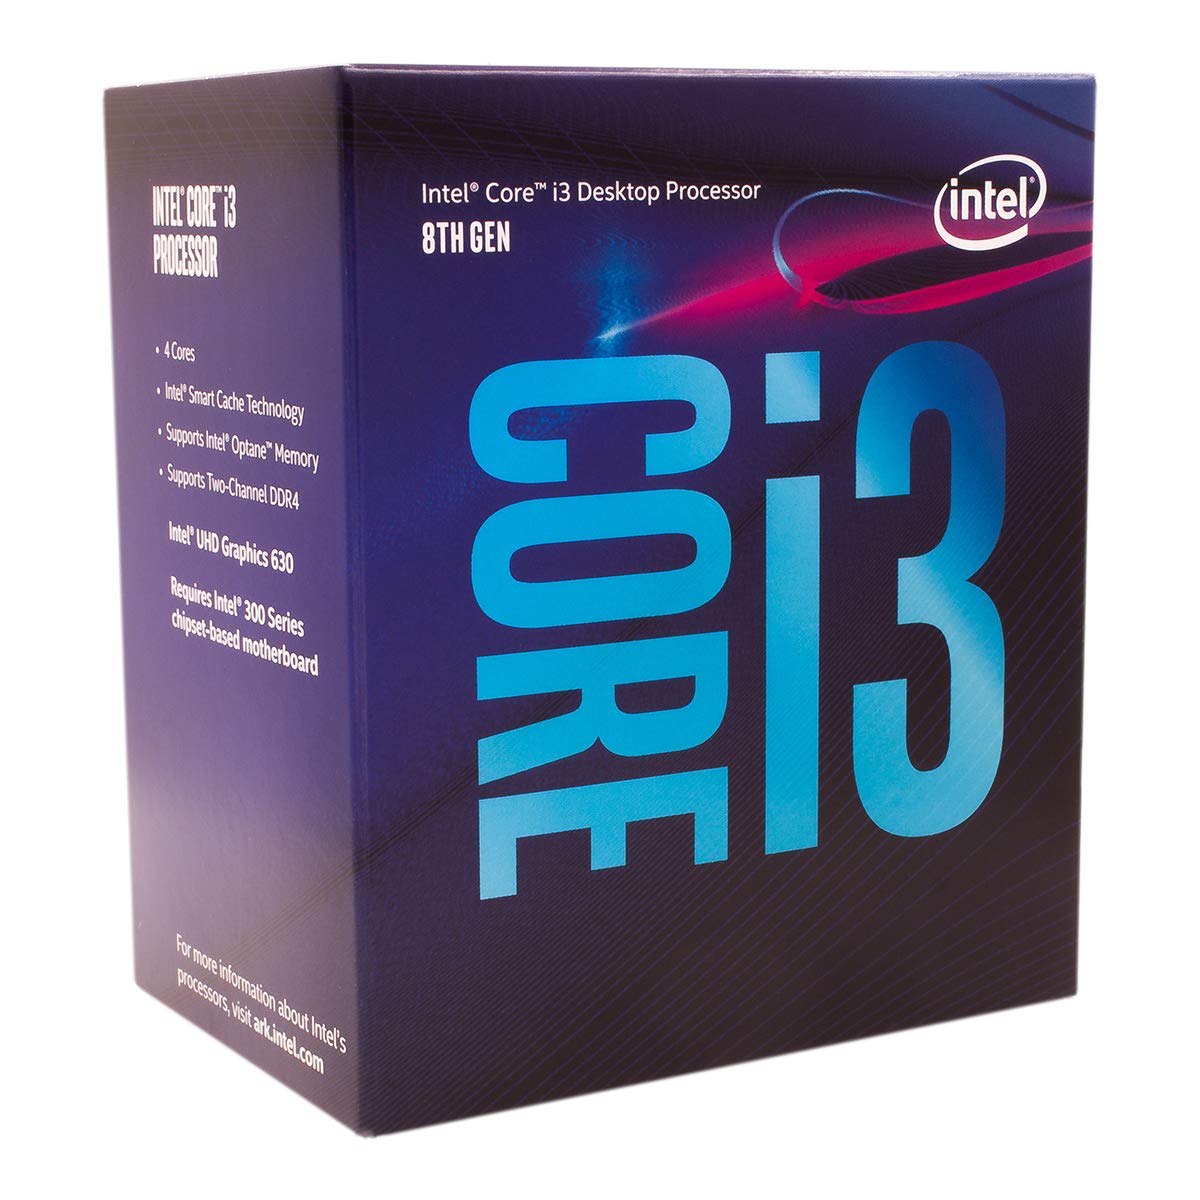 Book Cover Intel Core i3-8100 Desktop Processor 4 Cores up to 3.6 GHz Turbo Unlocked LGA1151 300 Series 95W Processor Core i3-8100